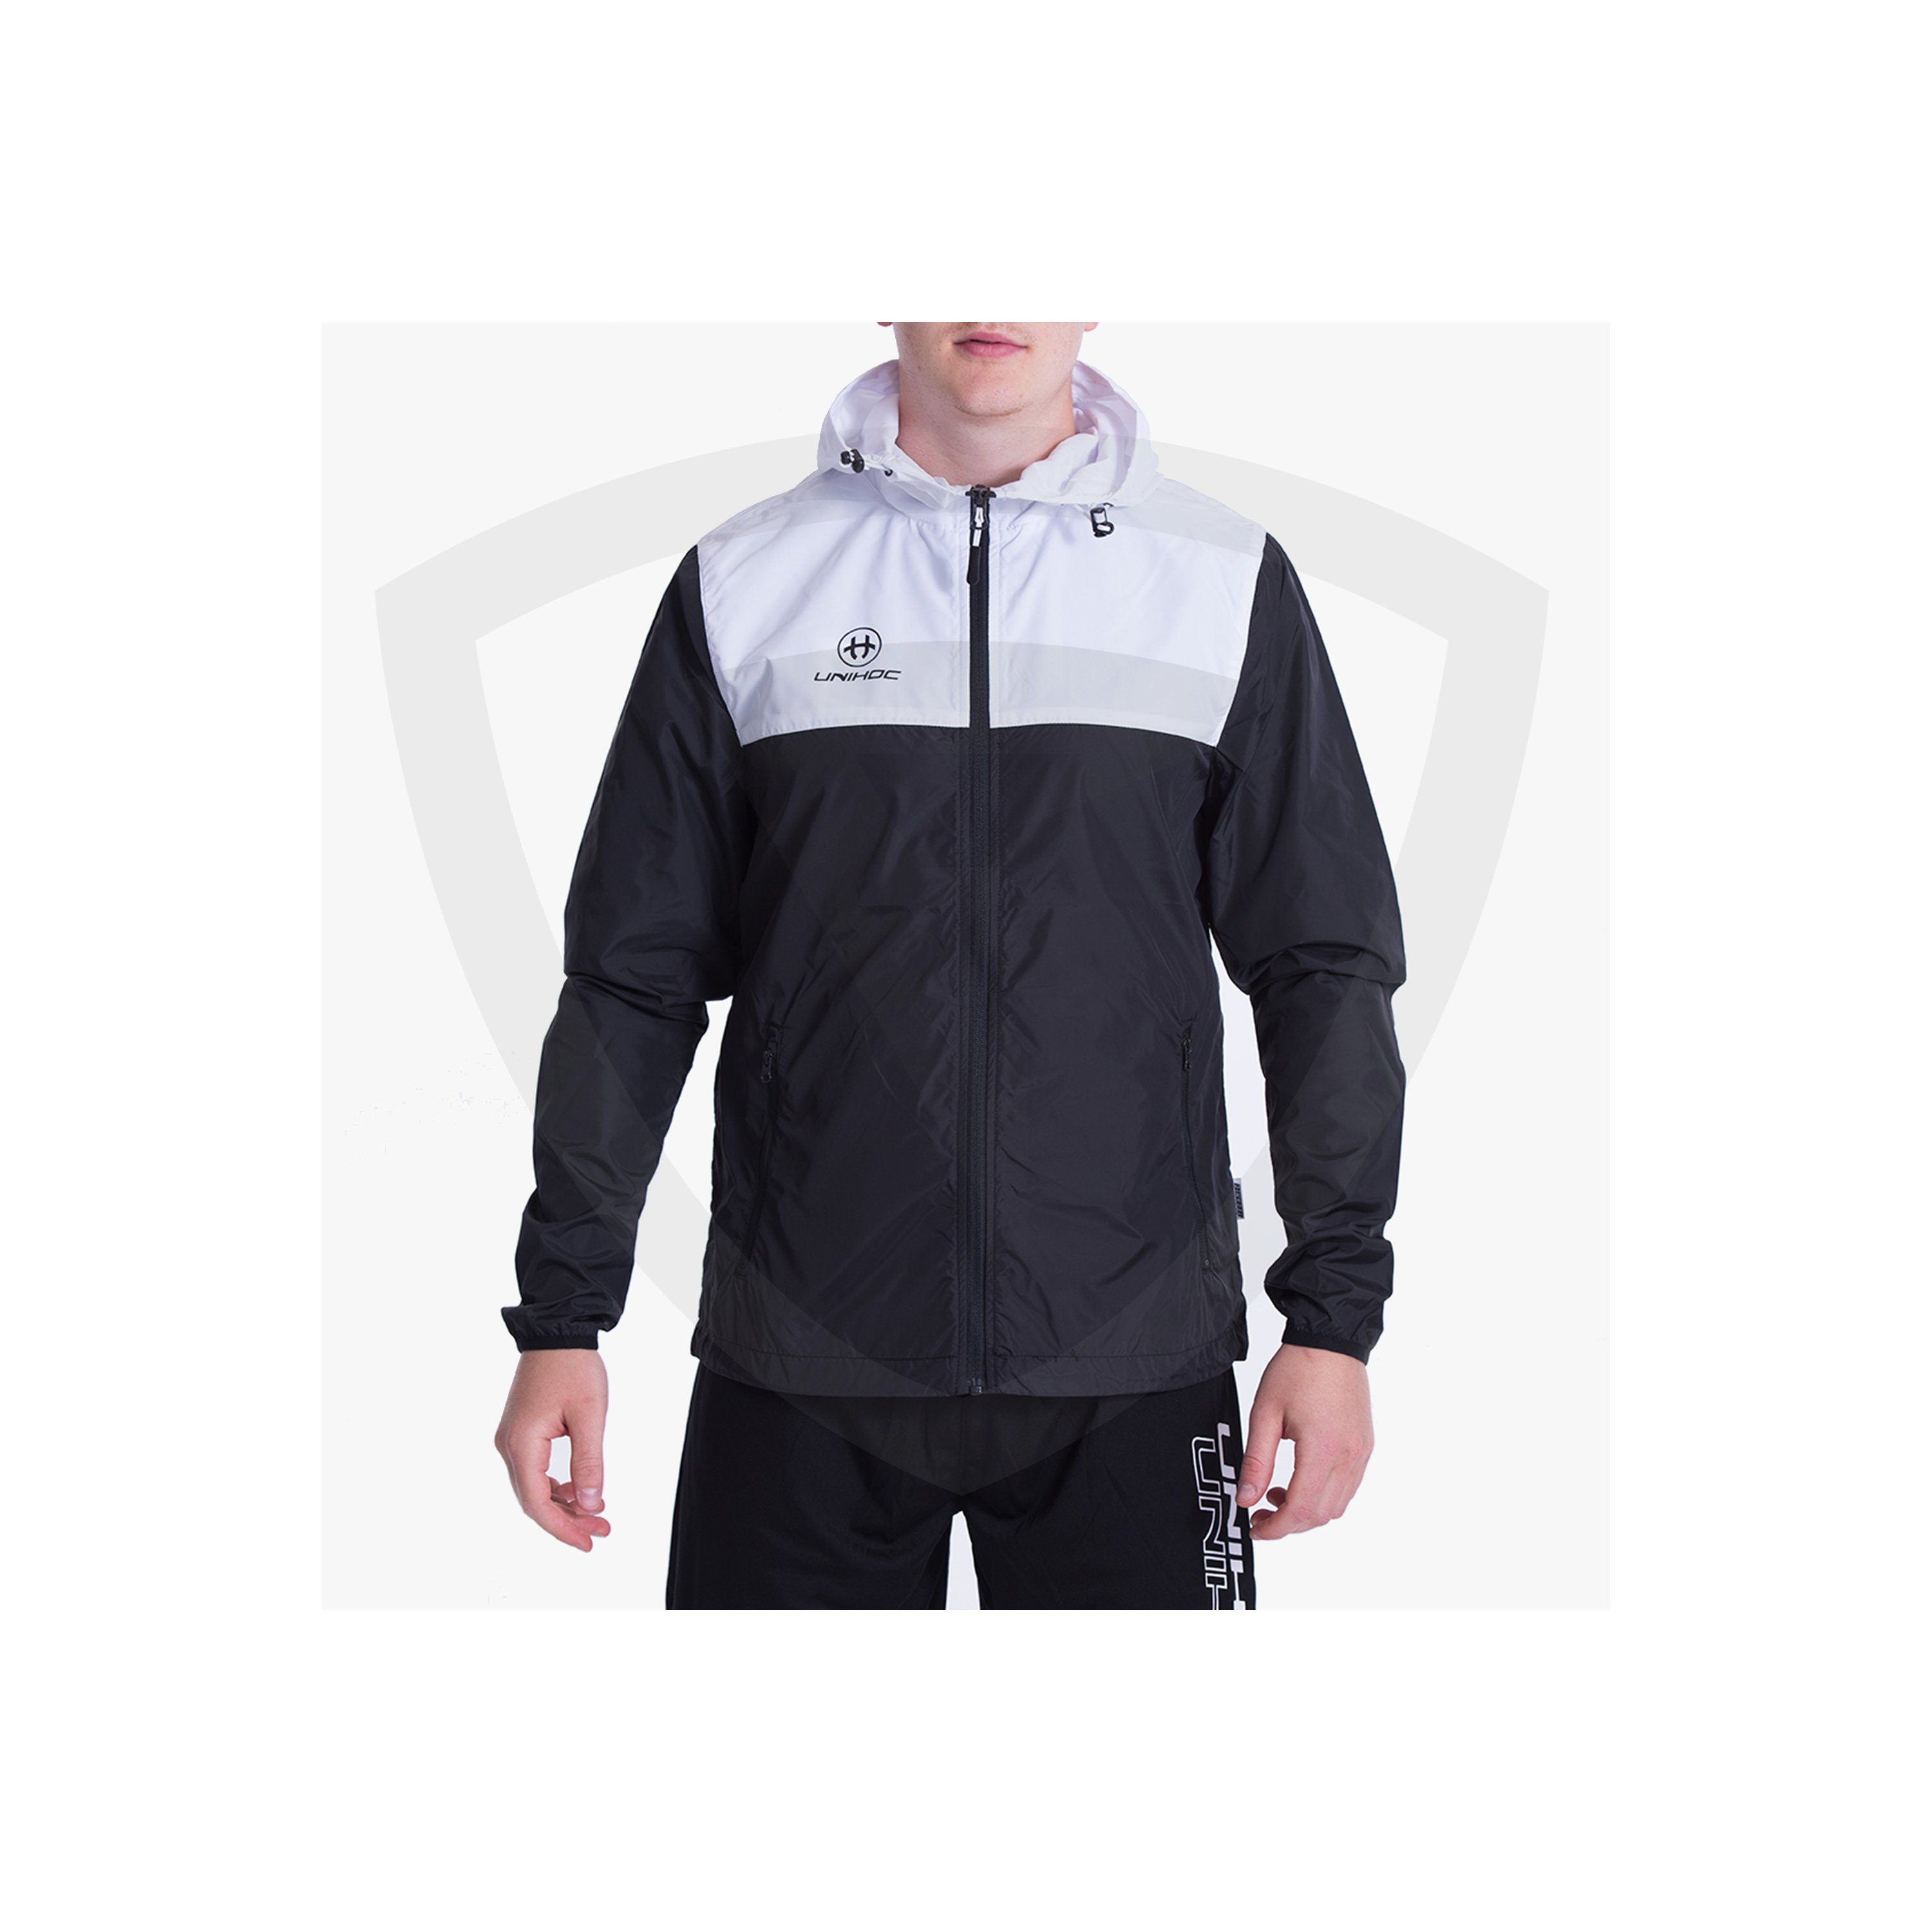 Unihoc Jacket Technic Wind-Runner XL černá-bílá